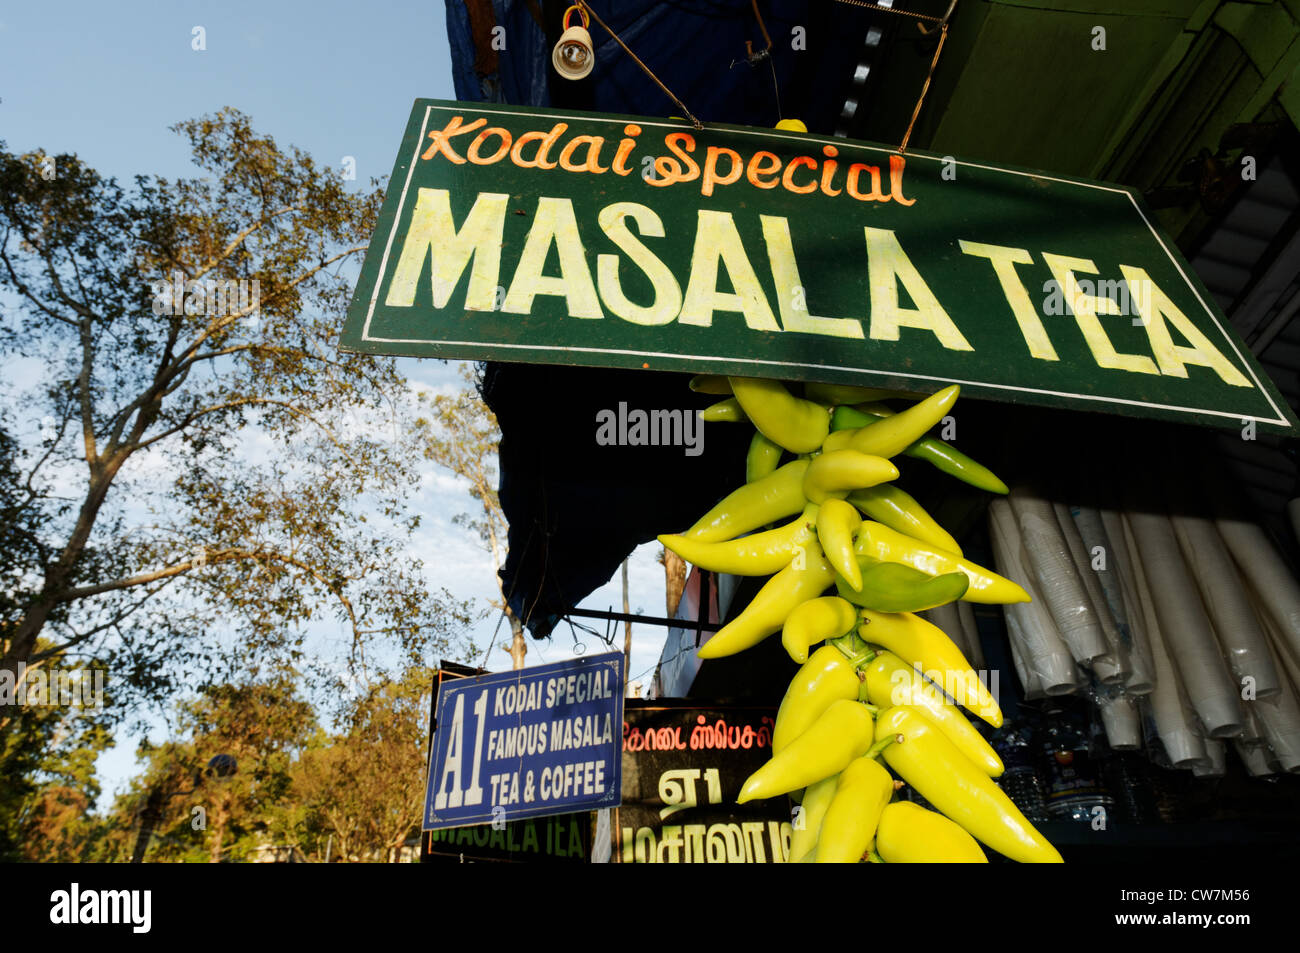 A Masala tea shop in India Stock Photo